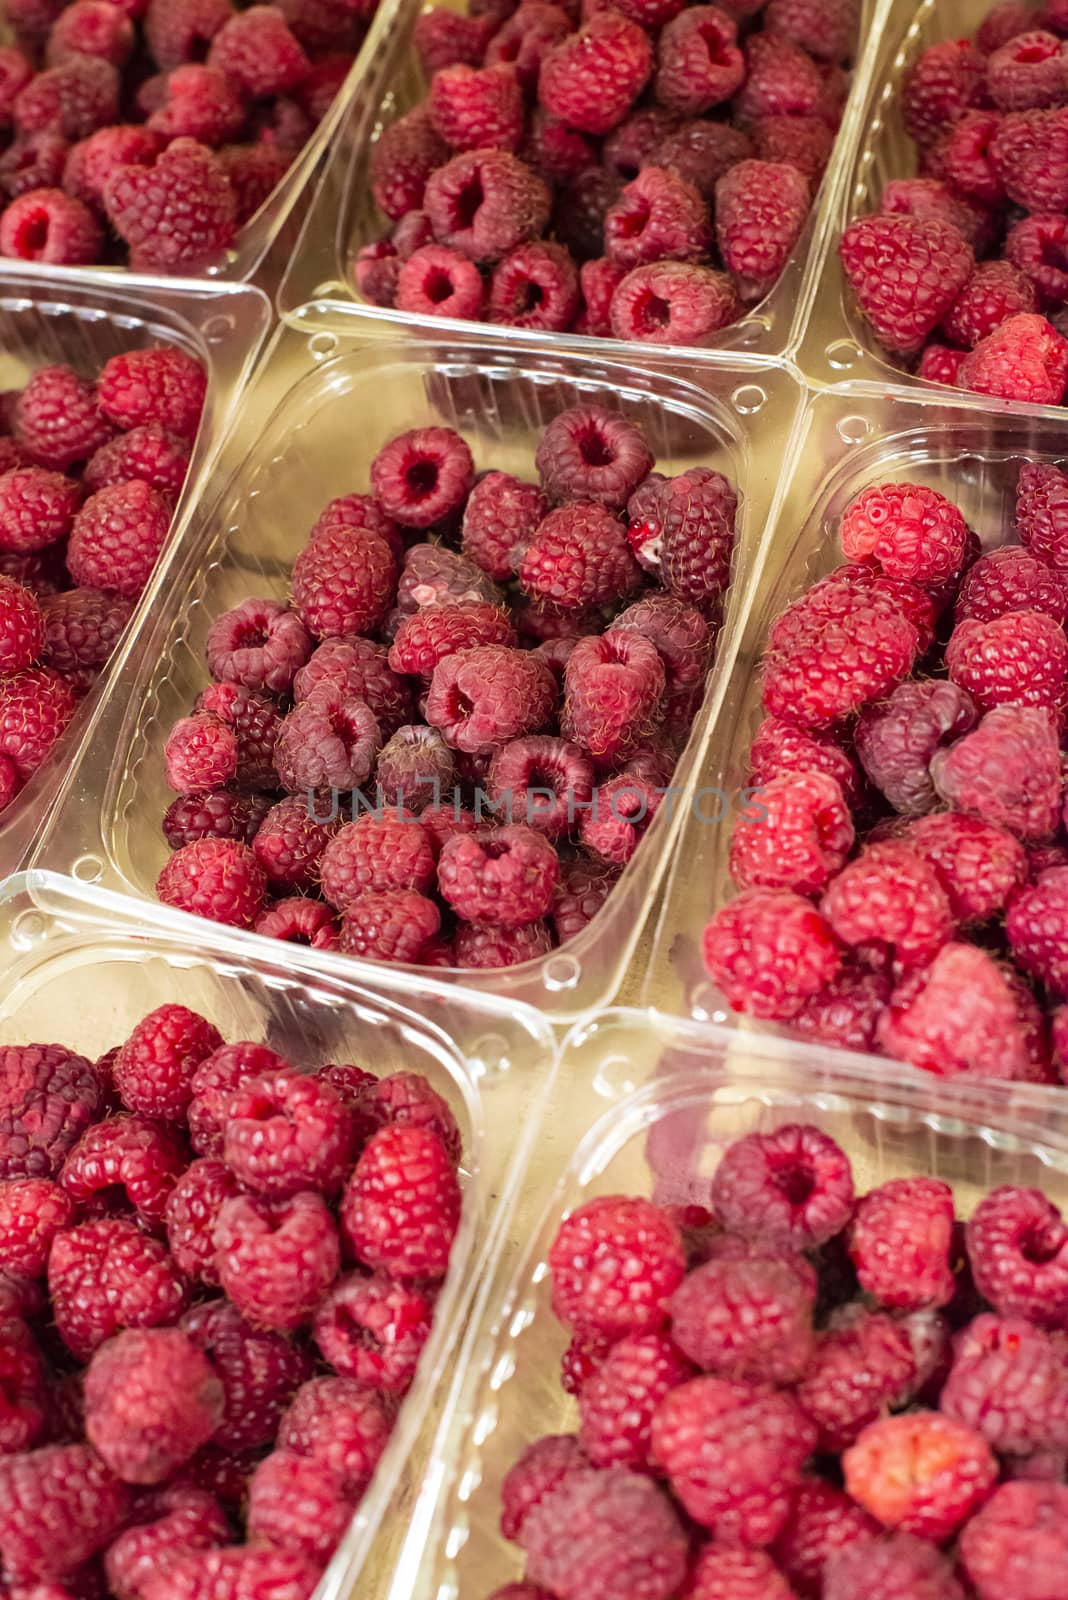 Raspberries on shelf in the market. by deyan_georgiev